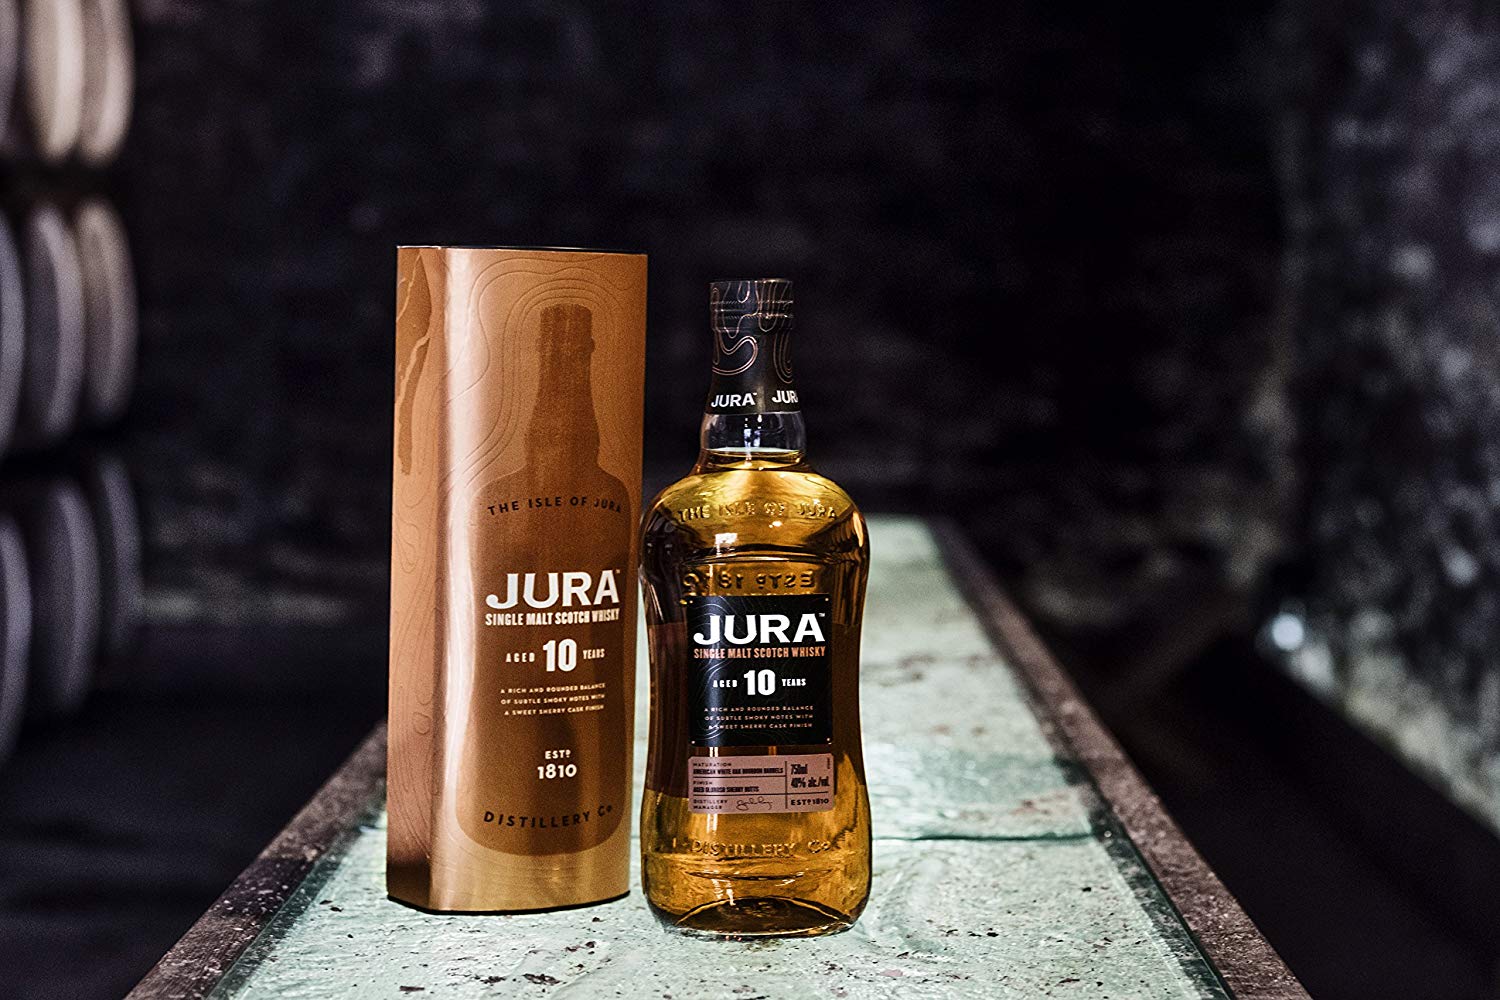 isle of jura 10 year old price